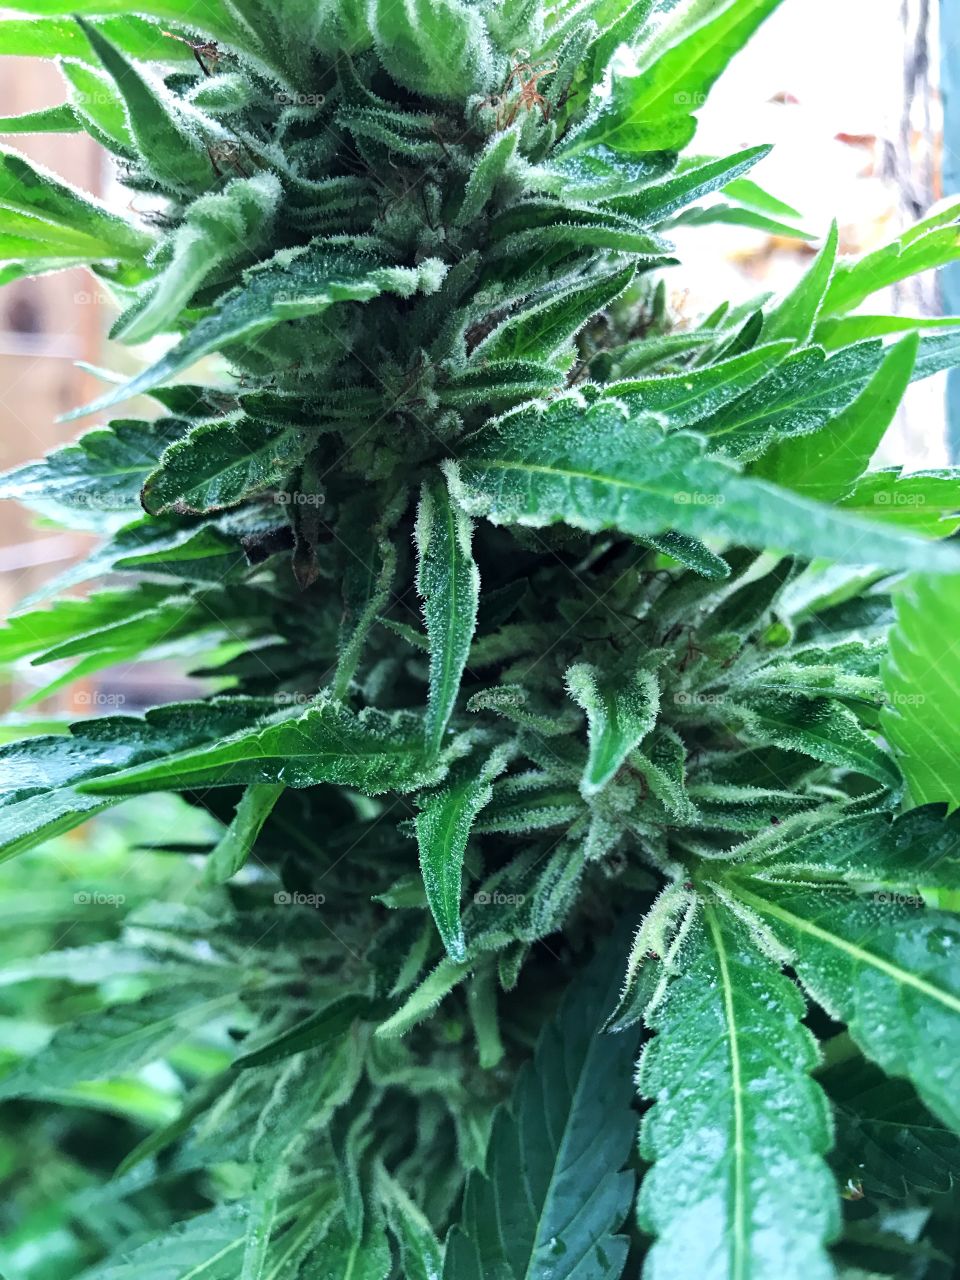 Big green cannabis flower ready for harvest. 